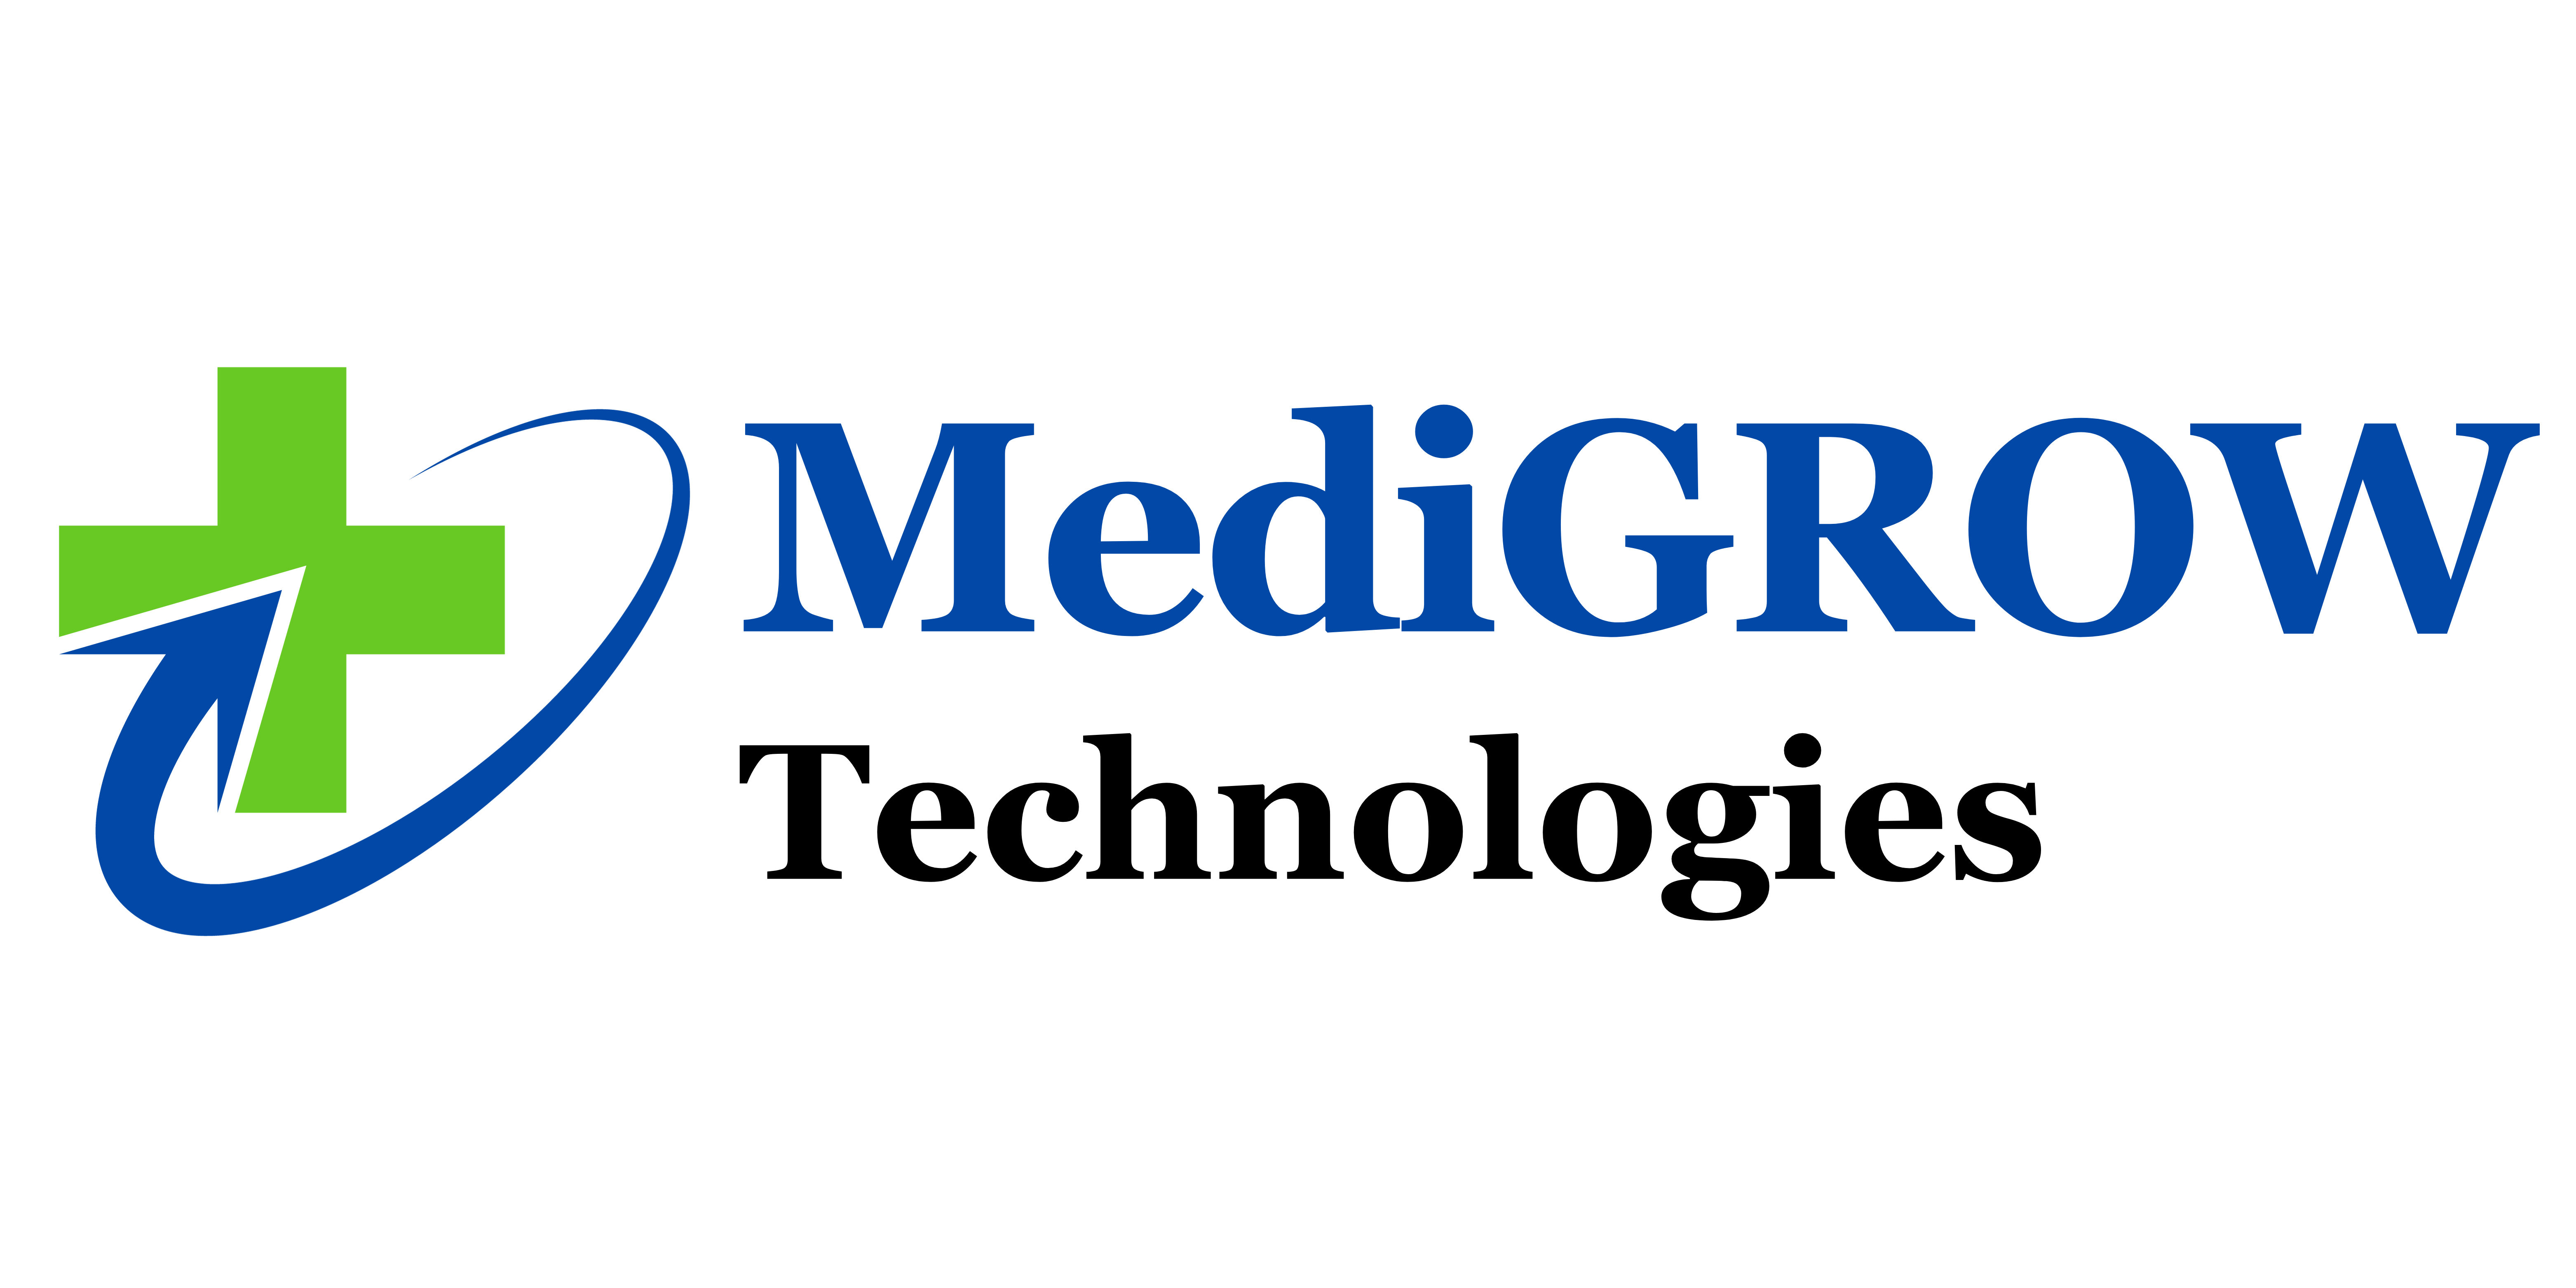  best Healthcare digital marketing agency |Medigrow Technologies